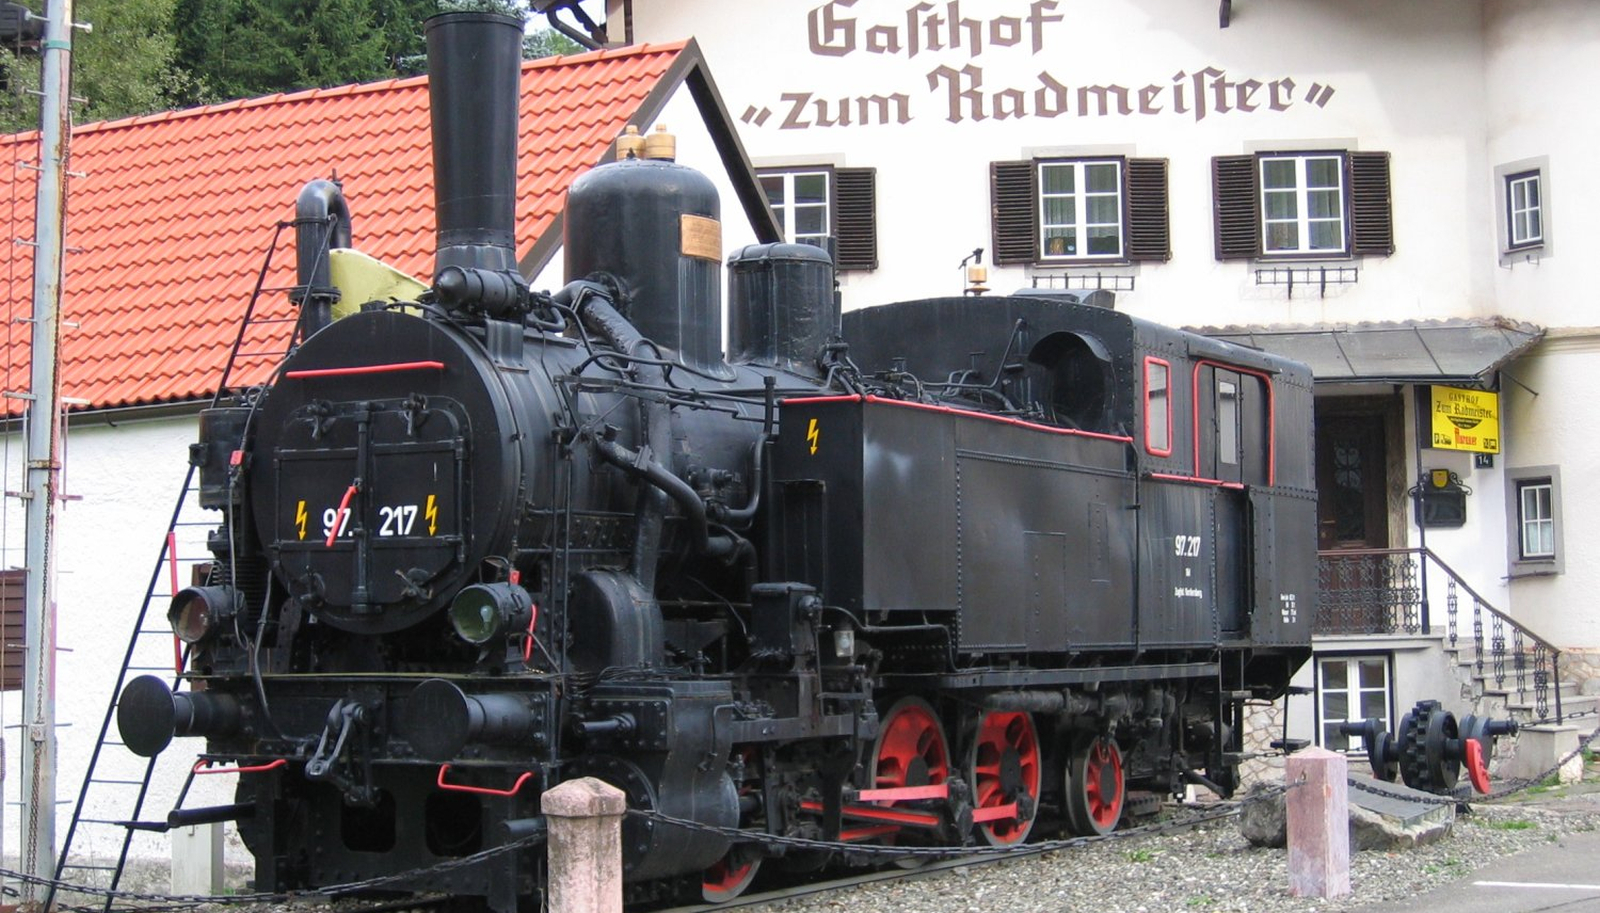 97.217 of the Erzbergbahn as a memorial in Vordernberg